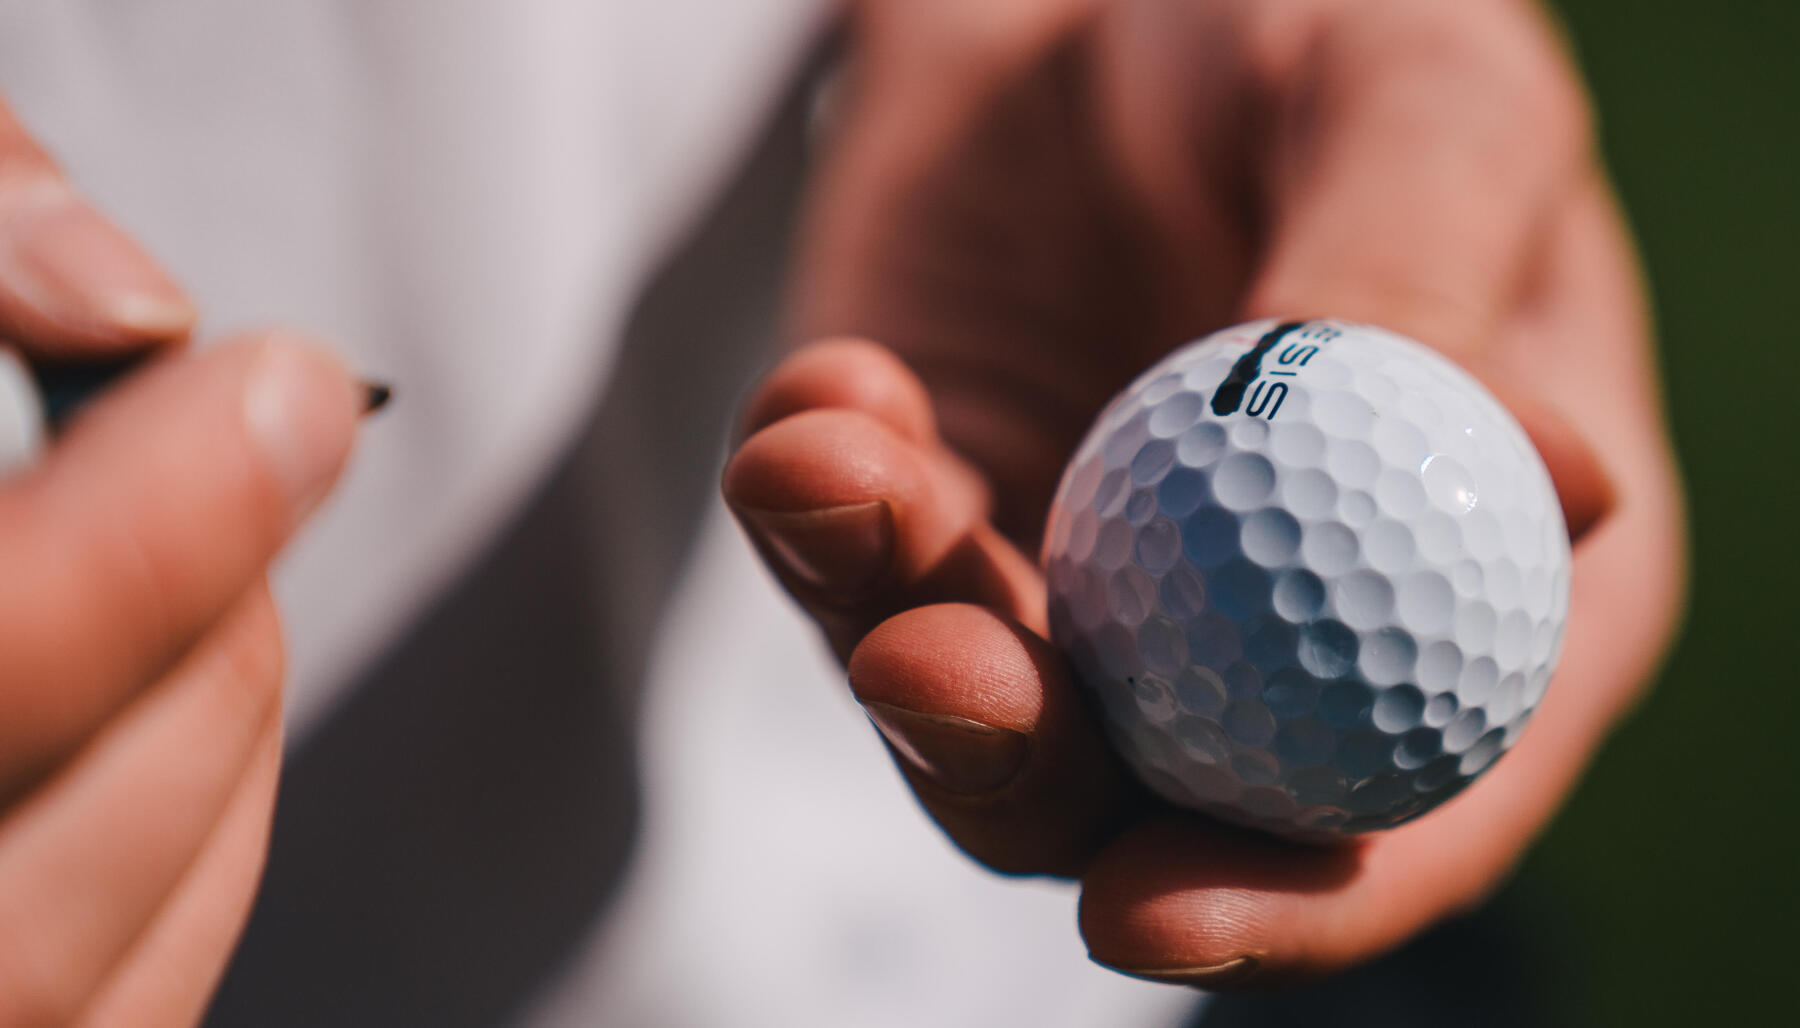  Golf Balls | What Kit Do I Need to Start Golfing?